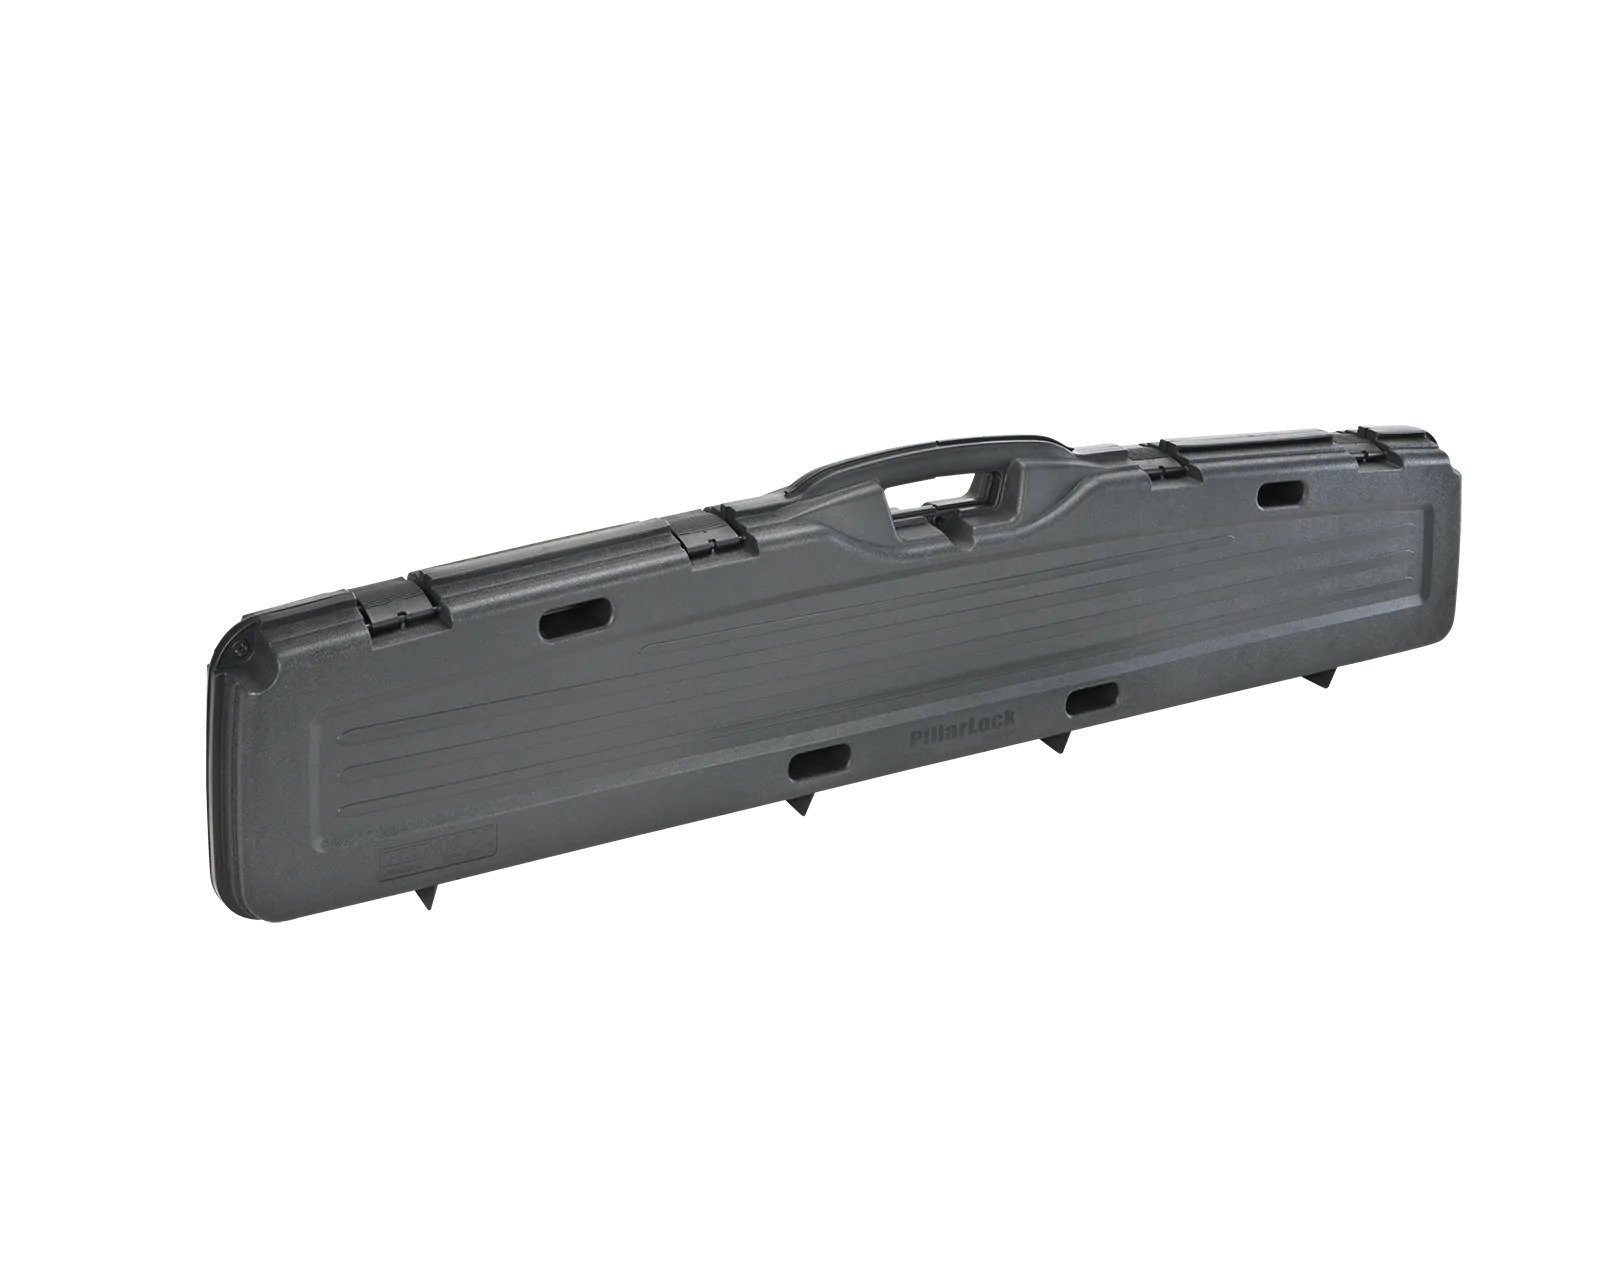 Plano Pro-Max Single Scoped Case, Black, Lockable Gun Case; Gun Storage - image 1 of 2